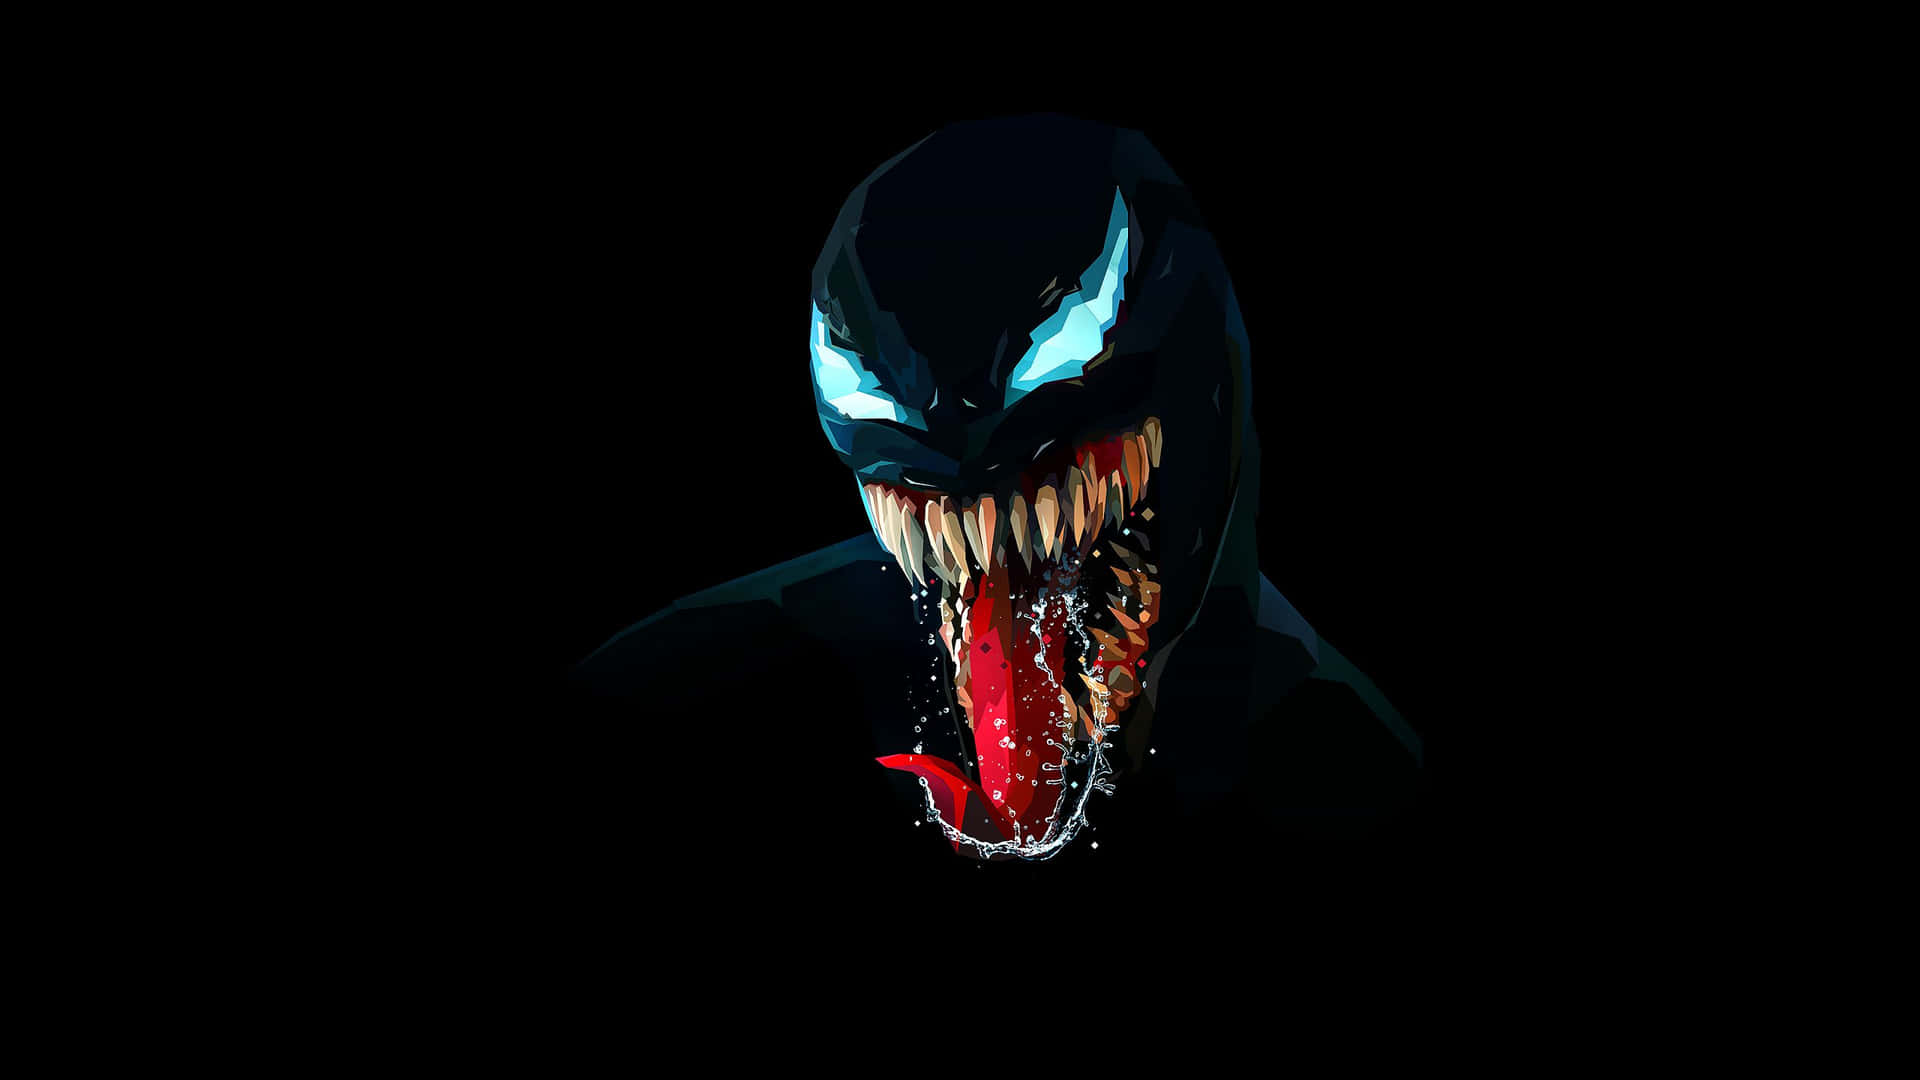 Sort Venom 2560 X 1440 Wallpaper